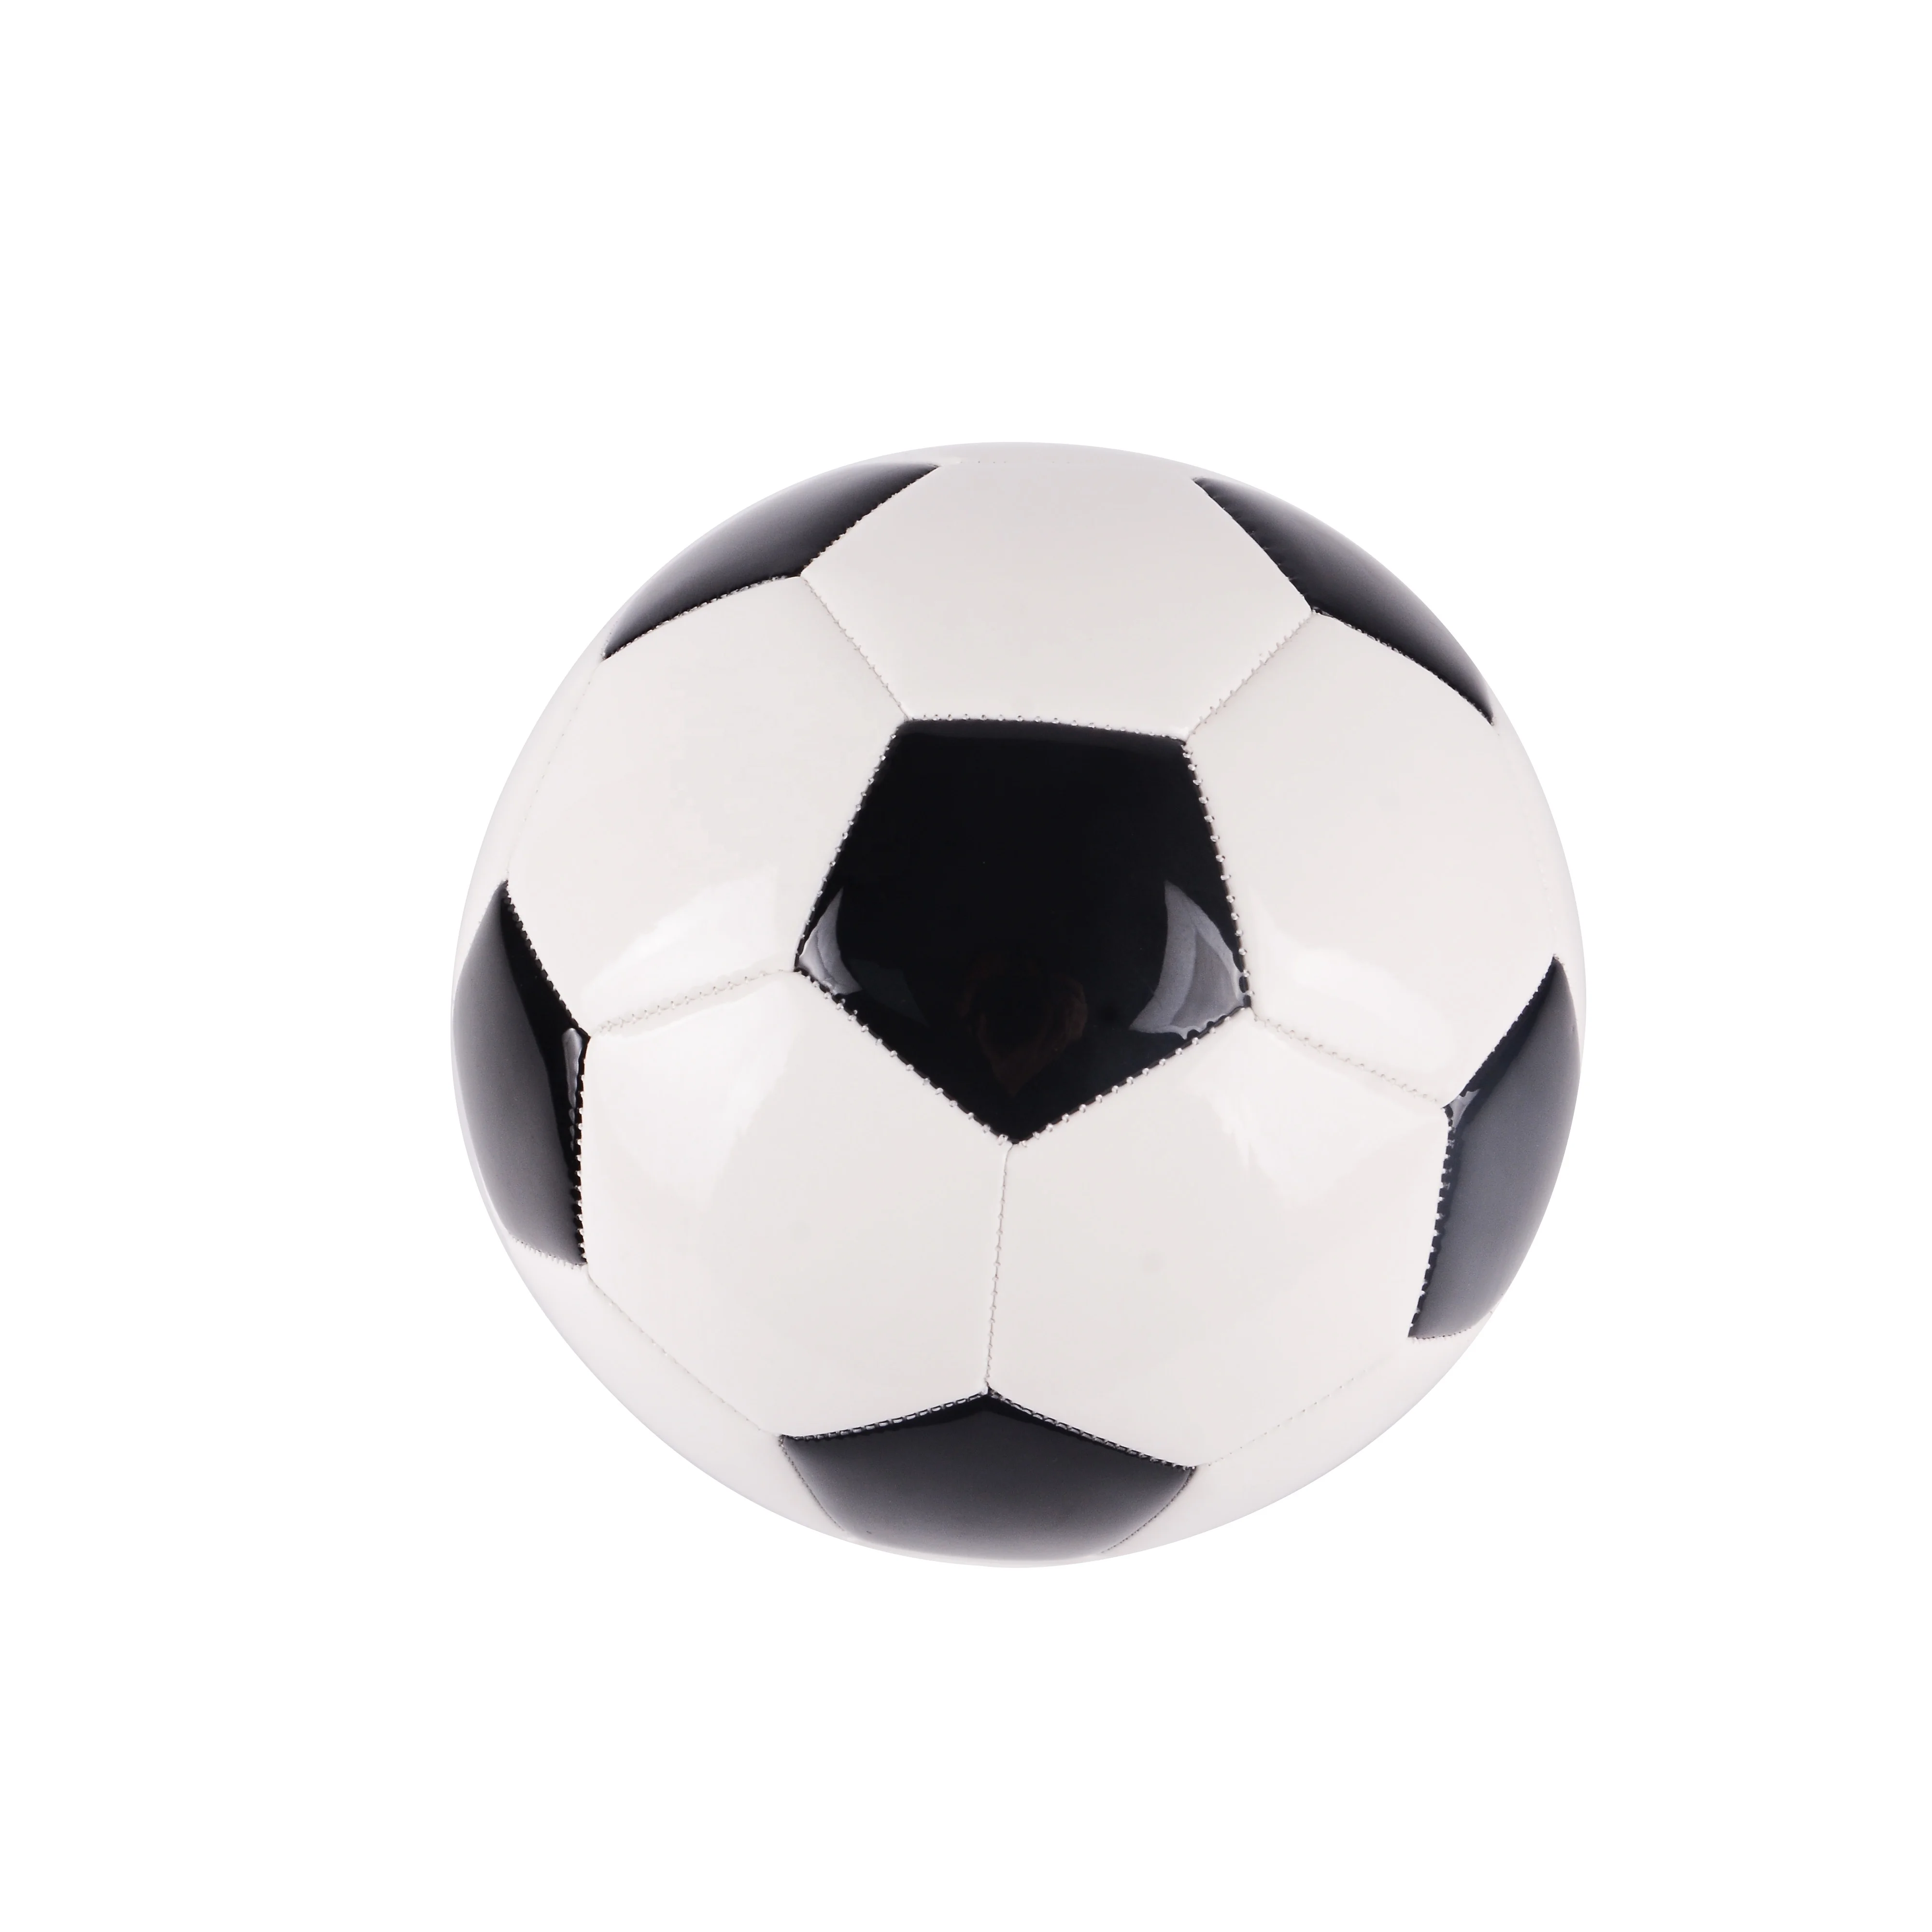 Lenwave PVC Soccer Ball - Size 3, Size 4, Size 5 Traditional Soccer Balls - Youth and Adult Soccer Balls - Bulk Soccer Ball